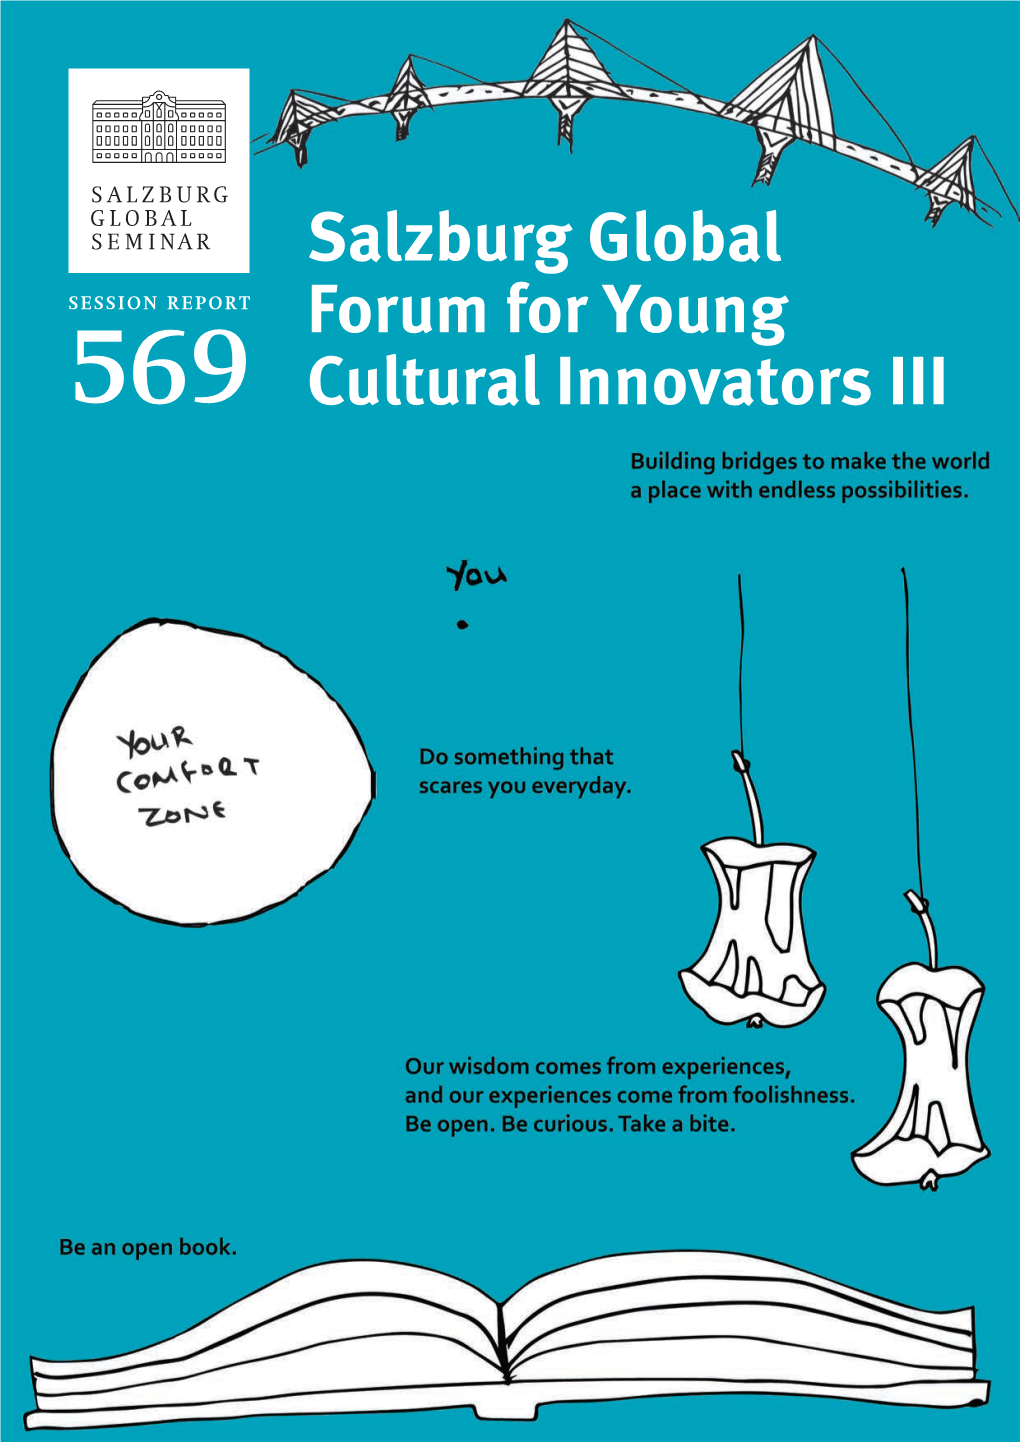 Salzburg Global Forum for Young Cultural Innovators